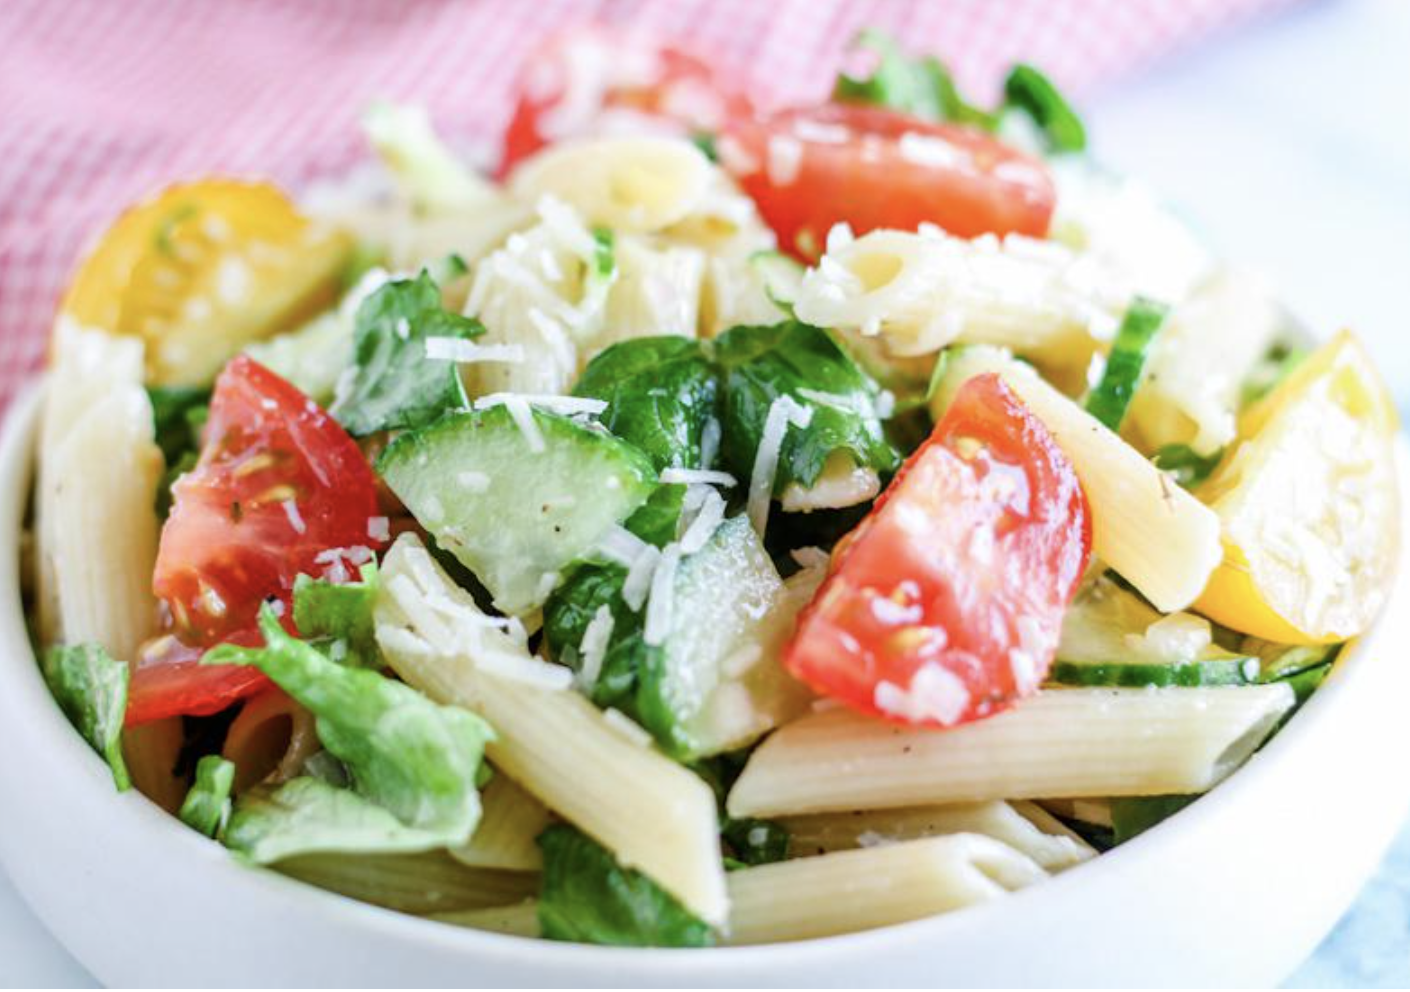 bowl of pasta salad with shredded parmesan